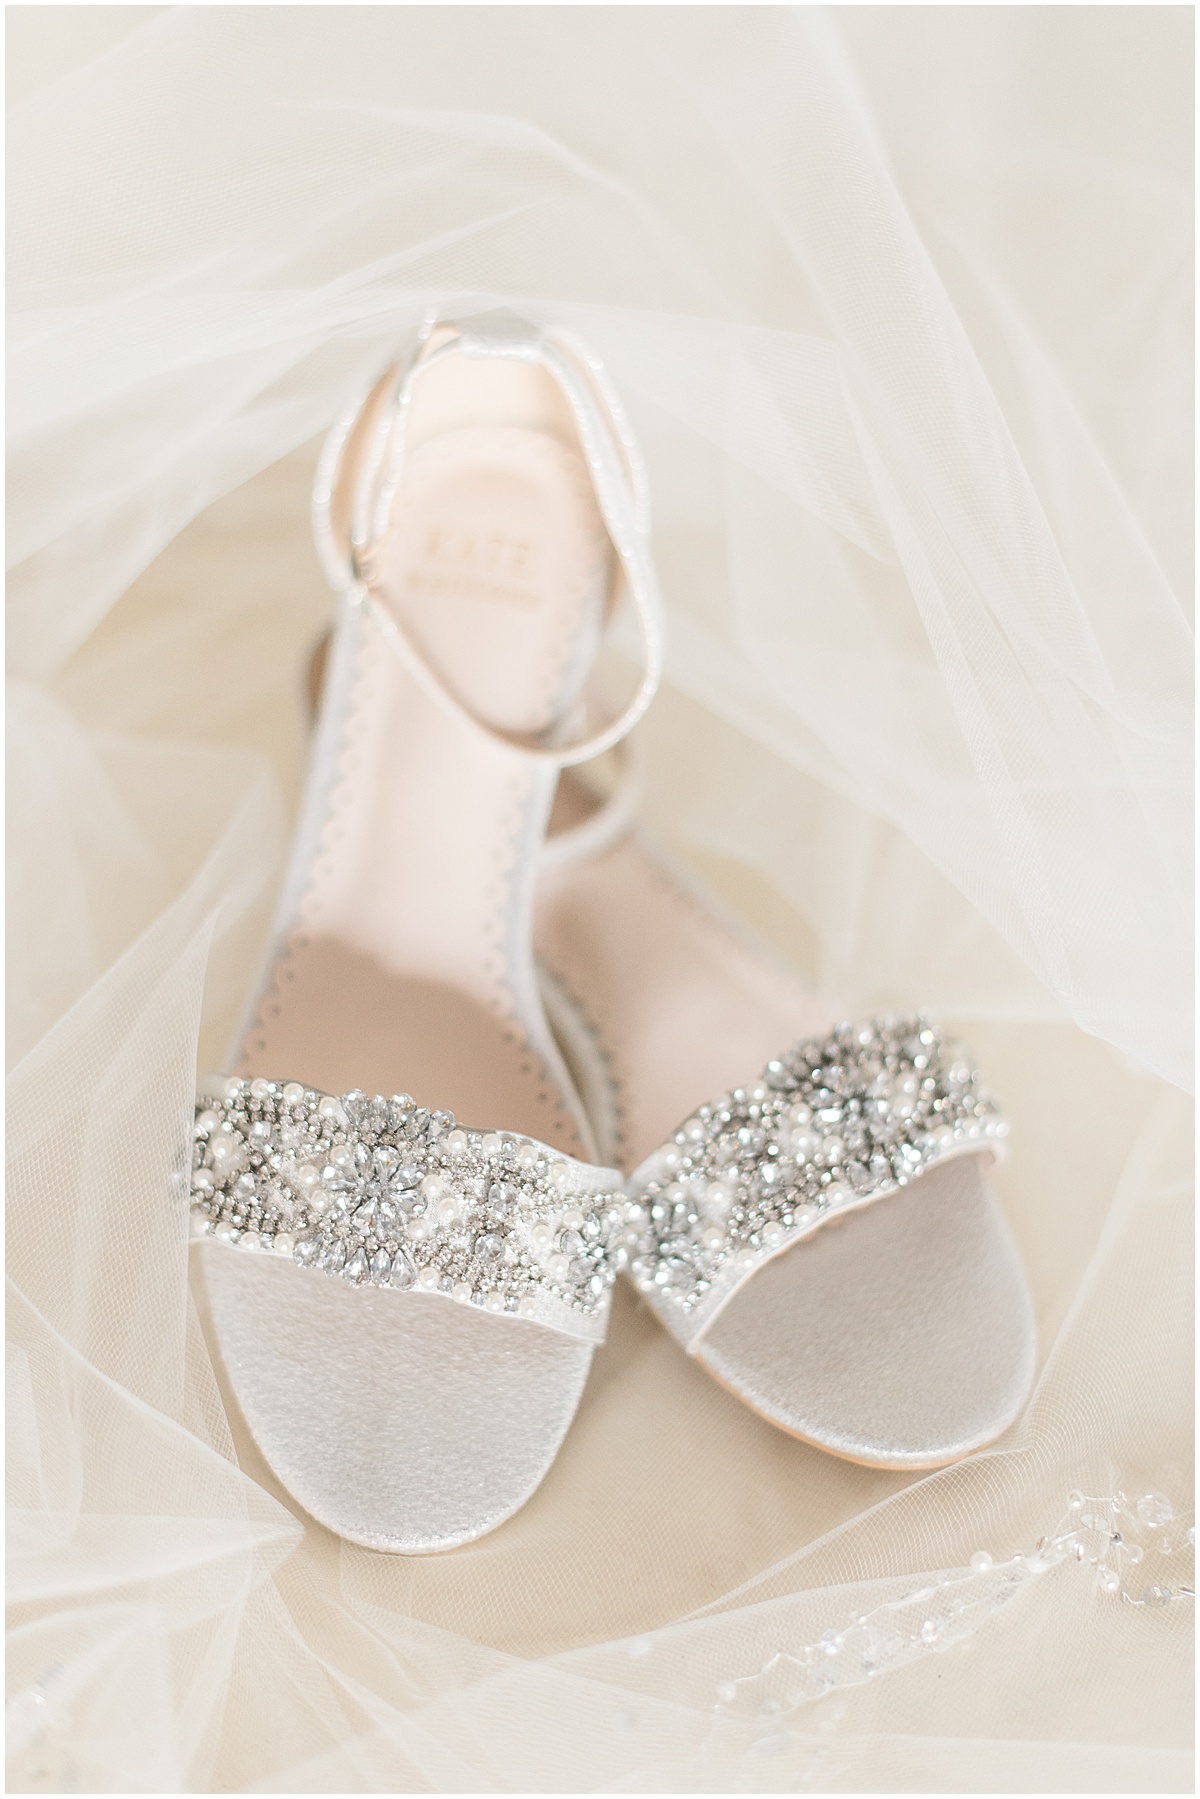 Bride's shoes at Bel Air Events Wedding in Kokomo, Indiana